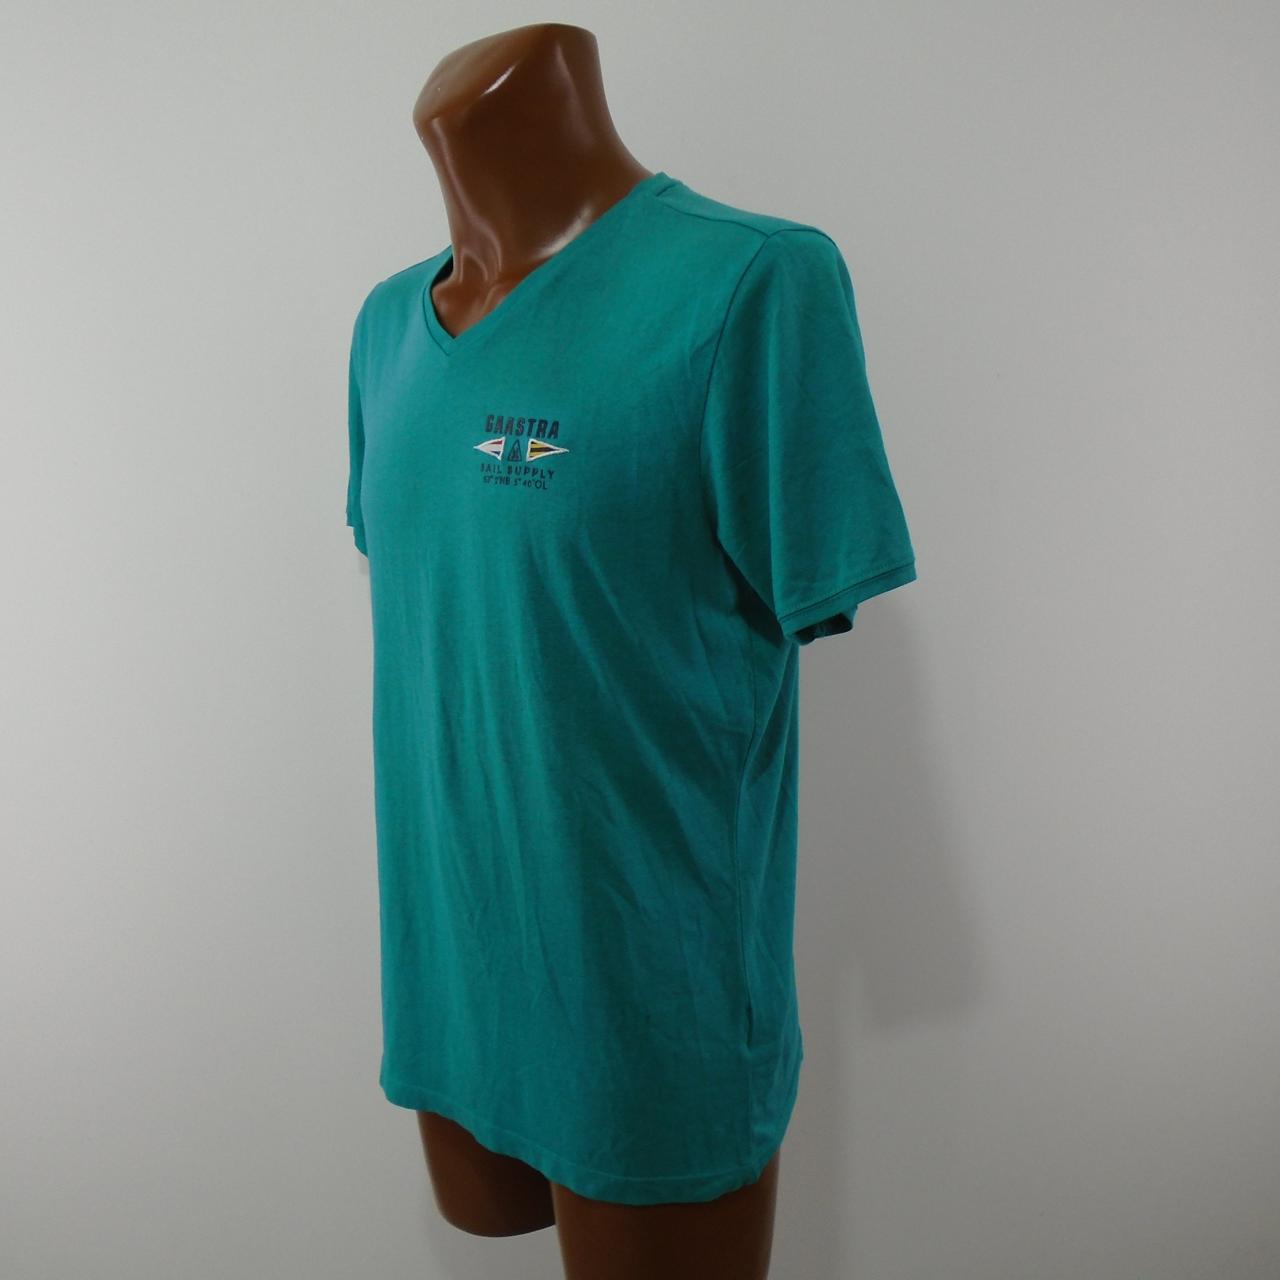 Men's T-Shirt Gaastra. Green. L. Used. Good